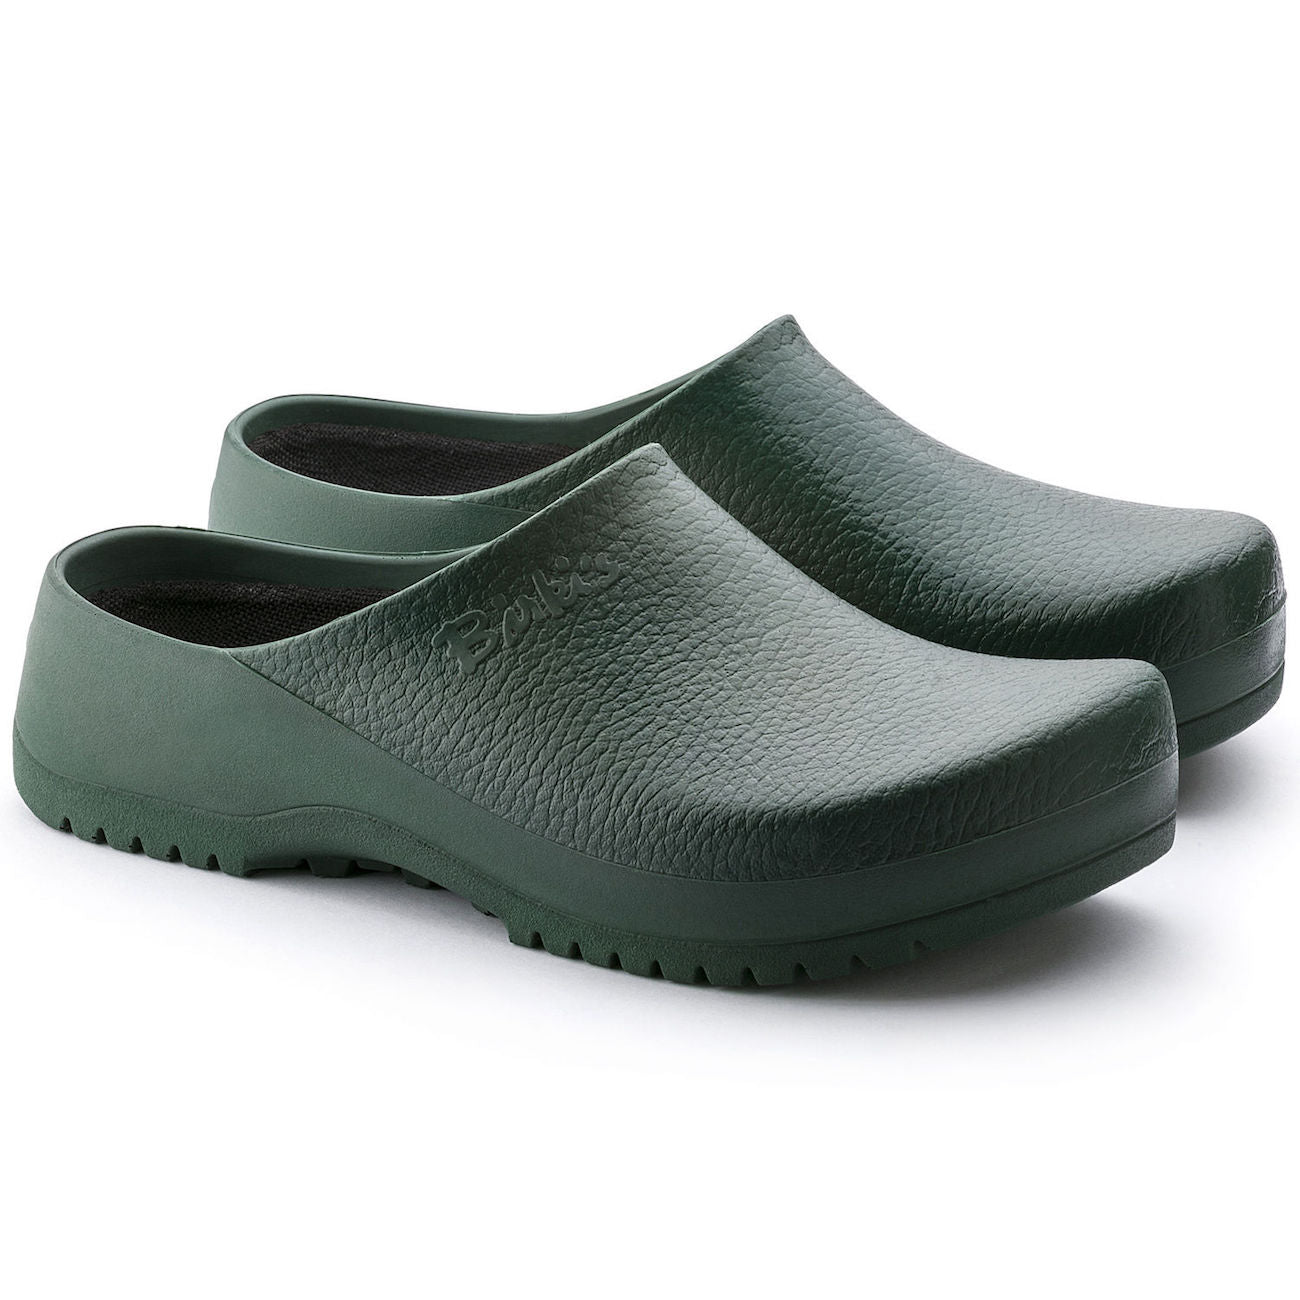 Birkenstock Professional Super-Birki PU Shoes | Green Regular Fit - Birkenstock Hahndorf